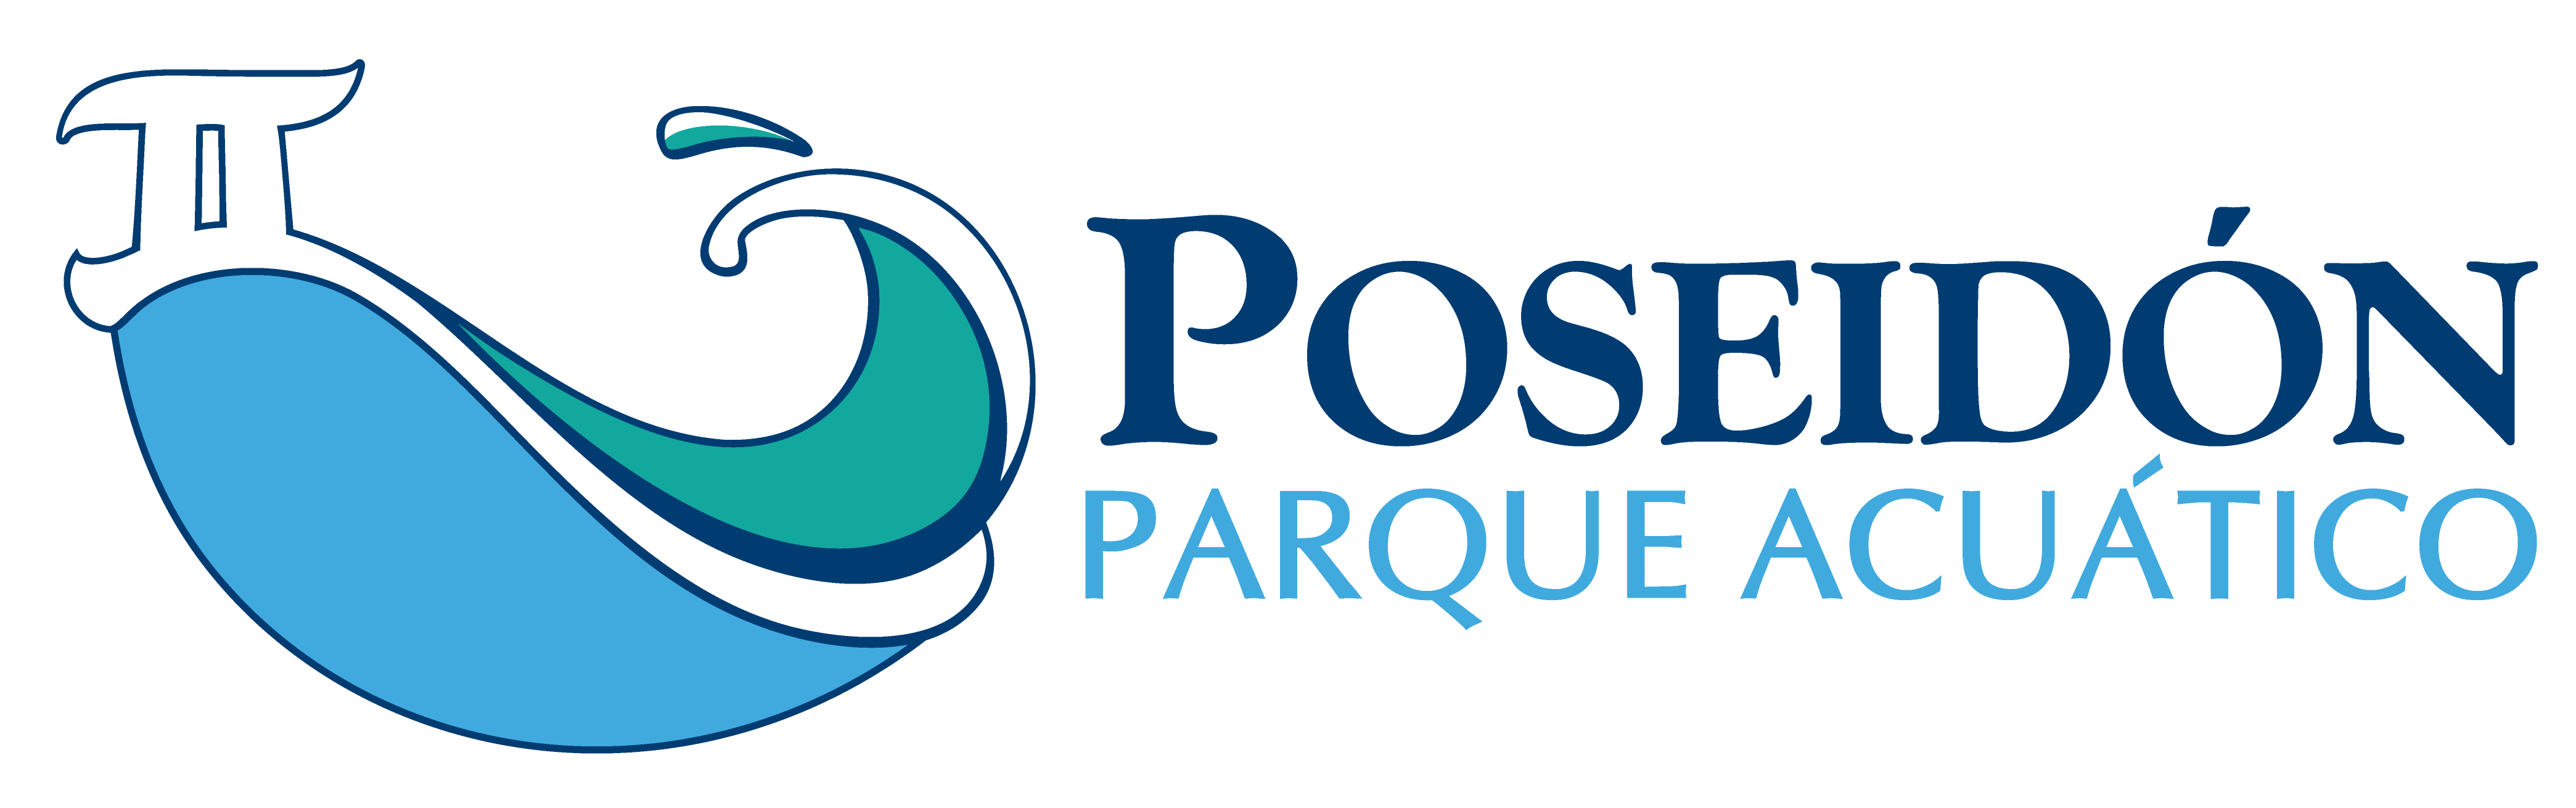 logo-poseidon-horizontal.png